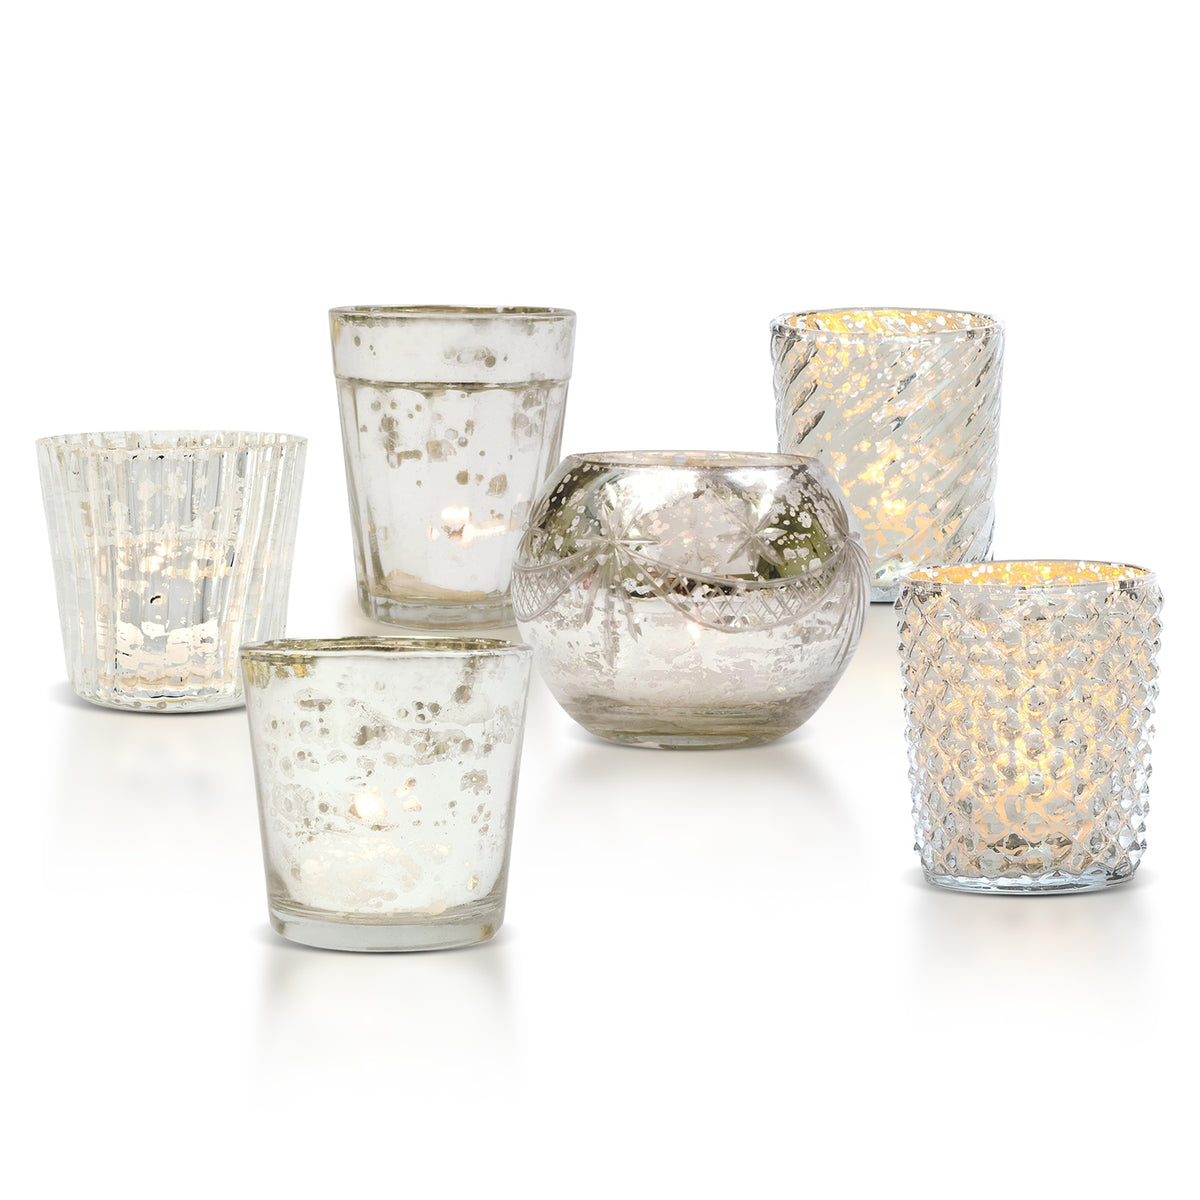 Showcase Vintage Mercury Glass Votive Tea Light Candle Holders - Silver (6 PACK, Assorted Designs)